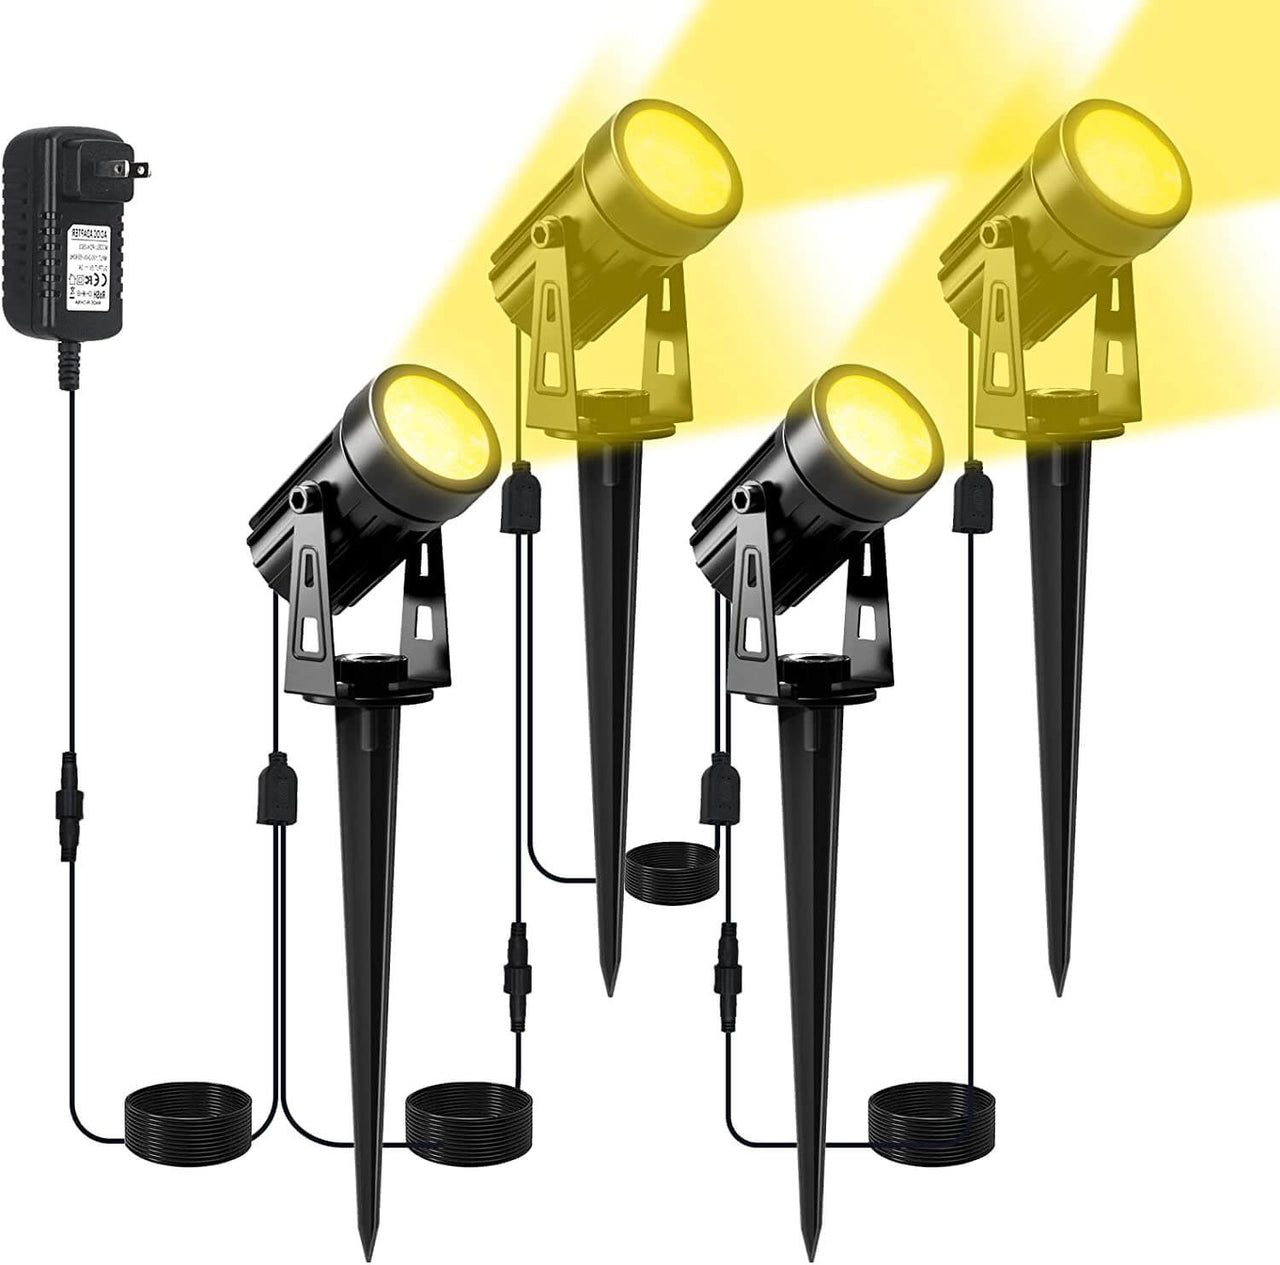 TSUN 4 Heads LED Spotlight Warm White Landscape Lighting Kits